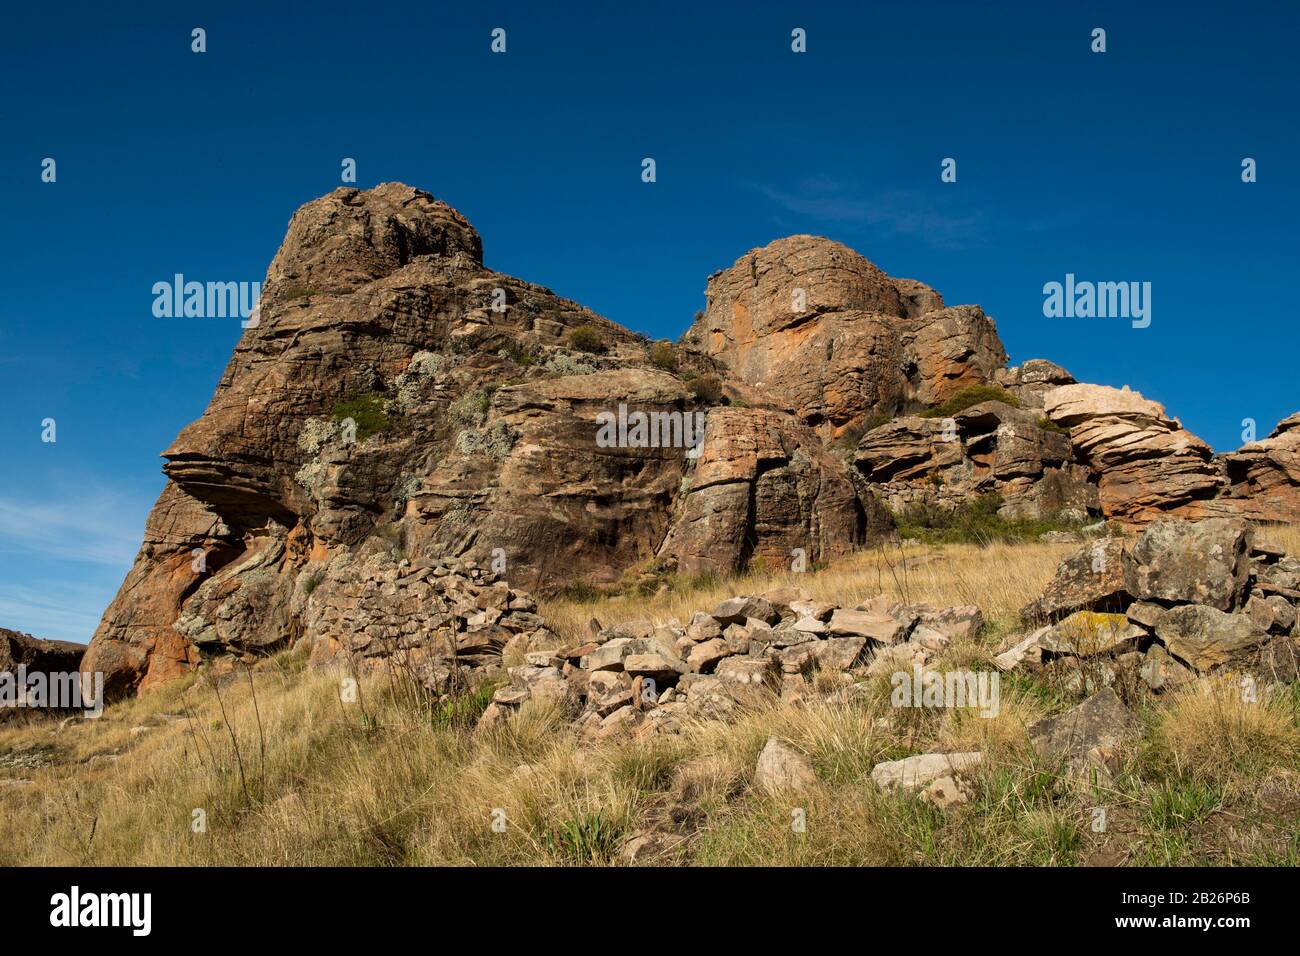 Rock Shelter, Sehlabathebe National Park, Lesotho Stockfoto